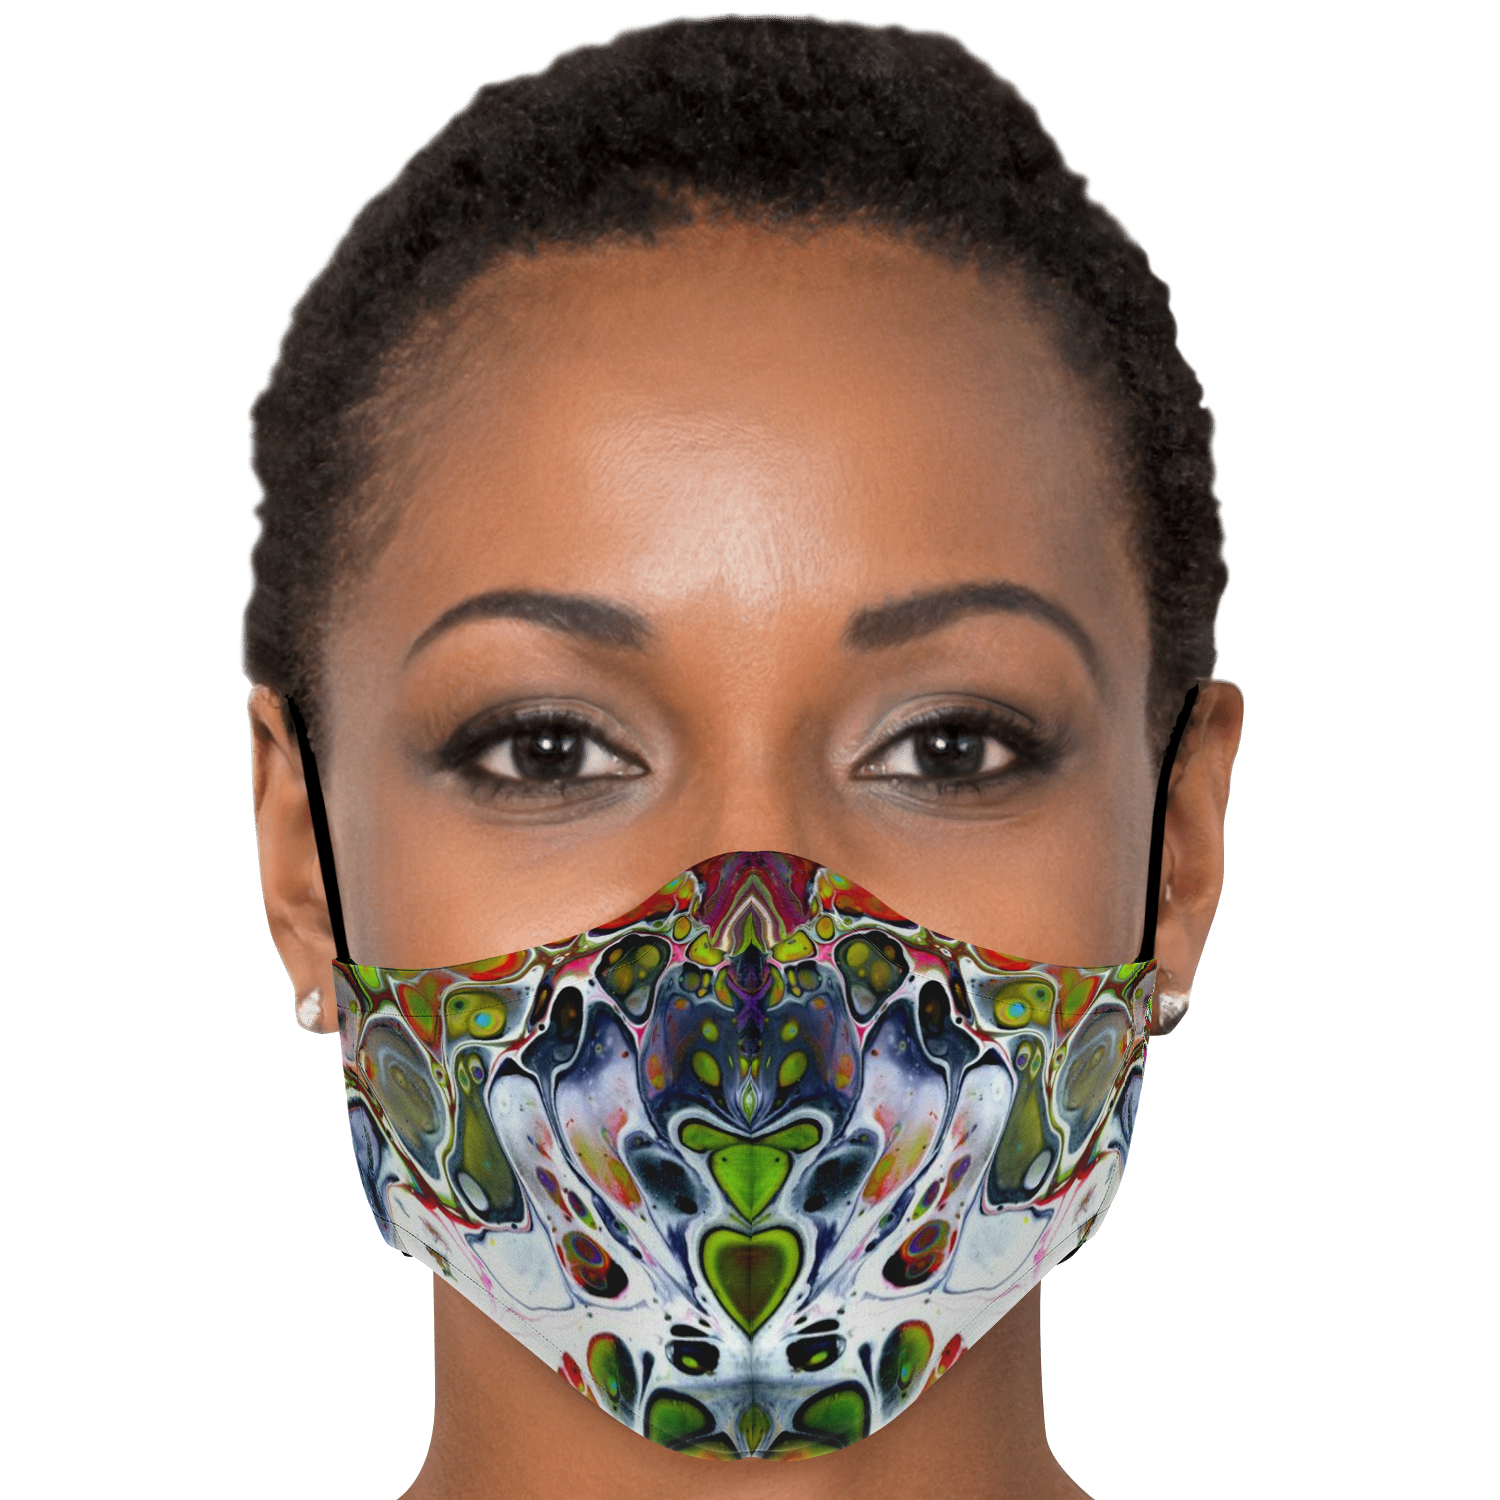 Mossy Melt Face Mask